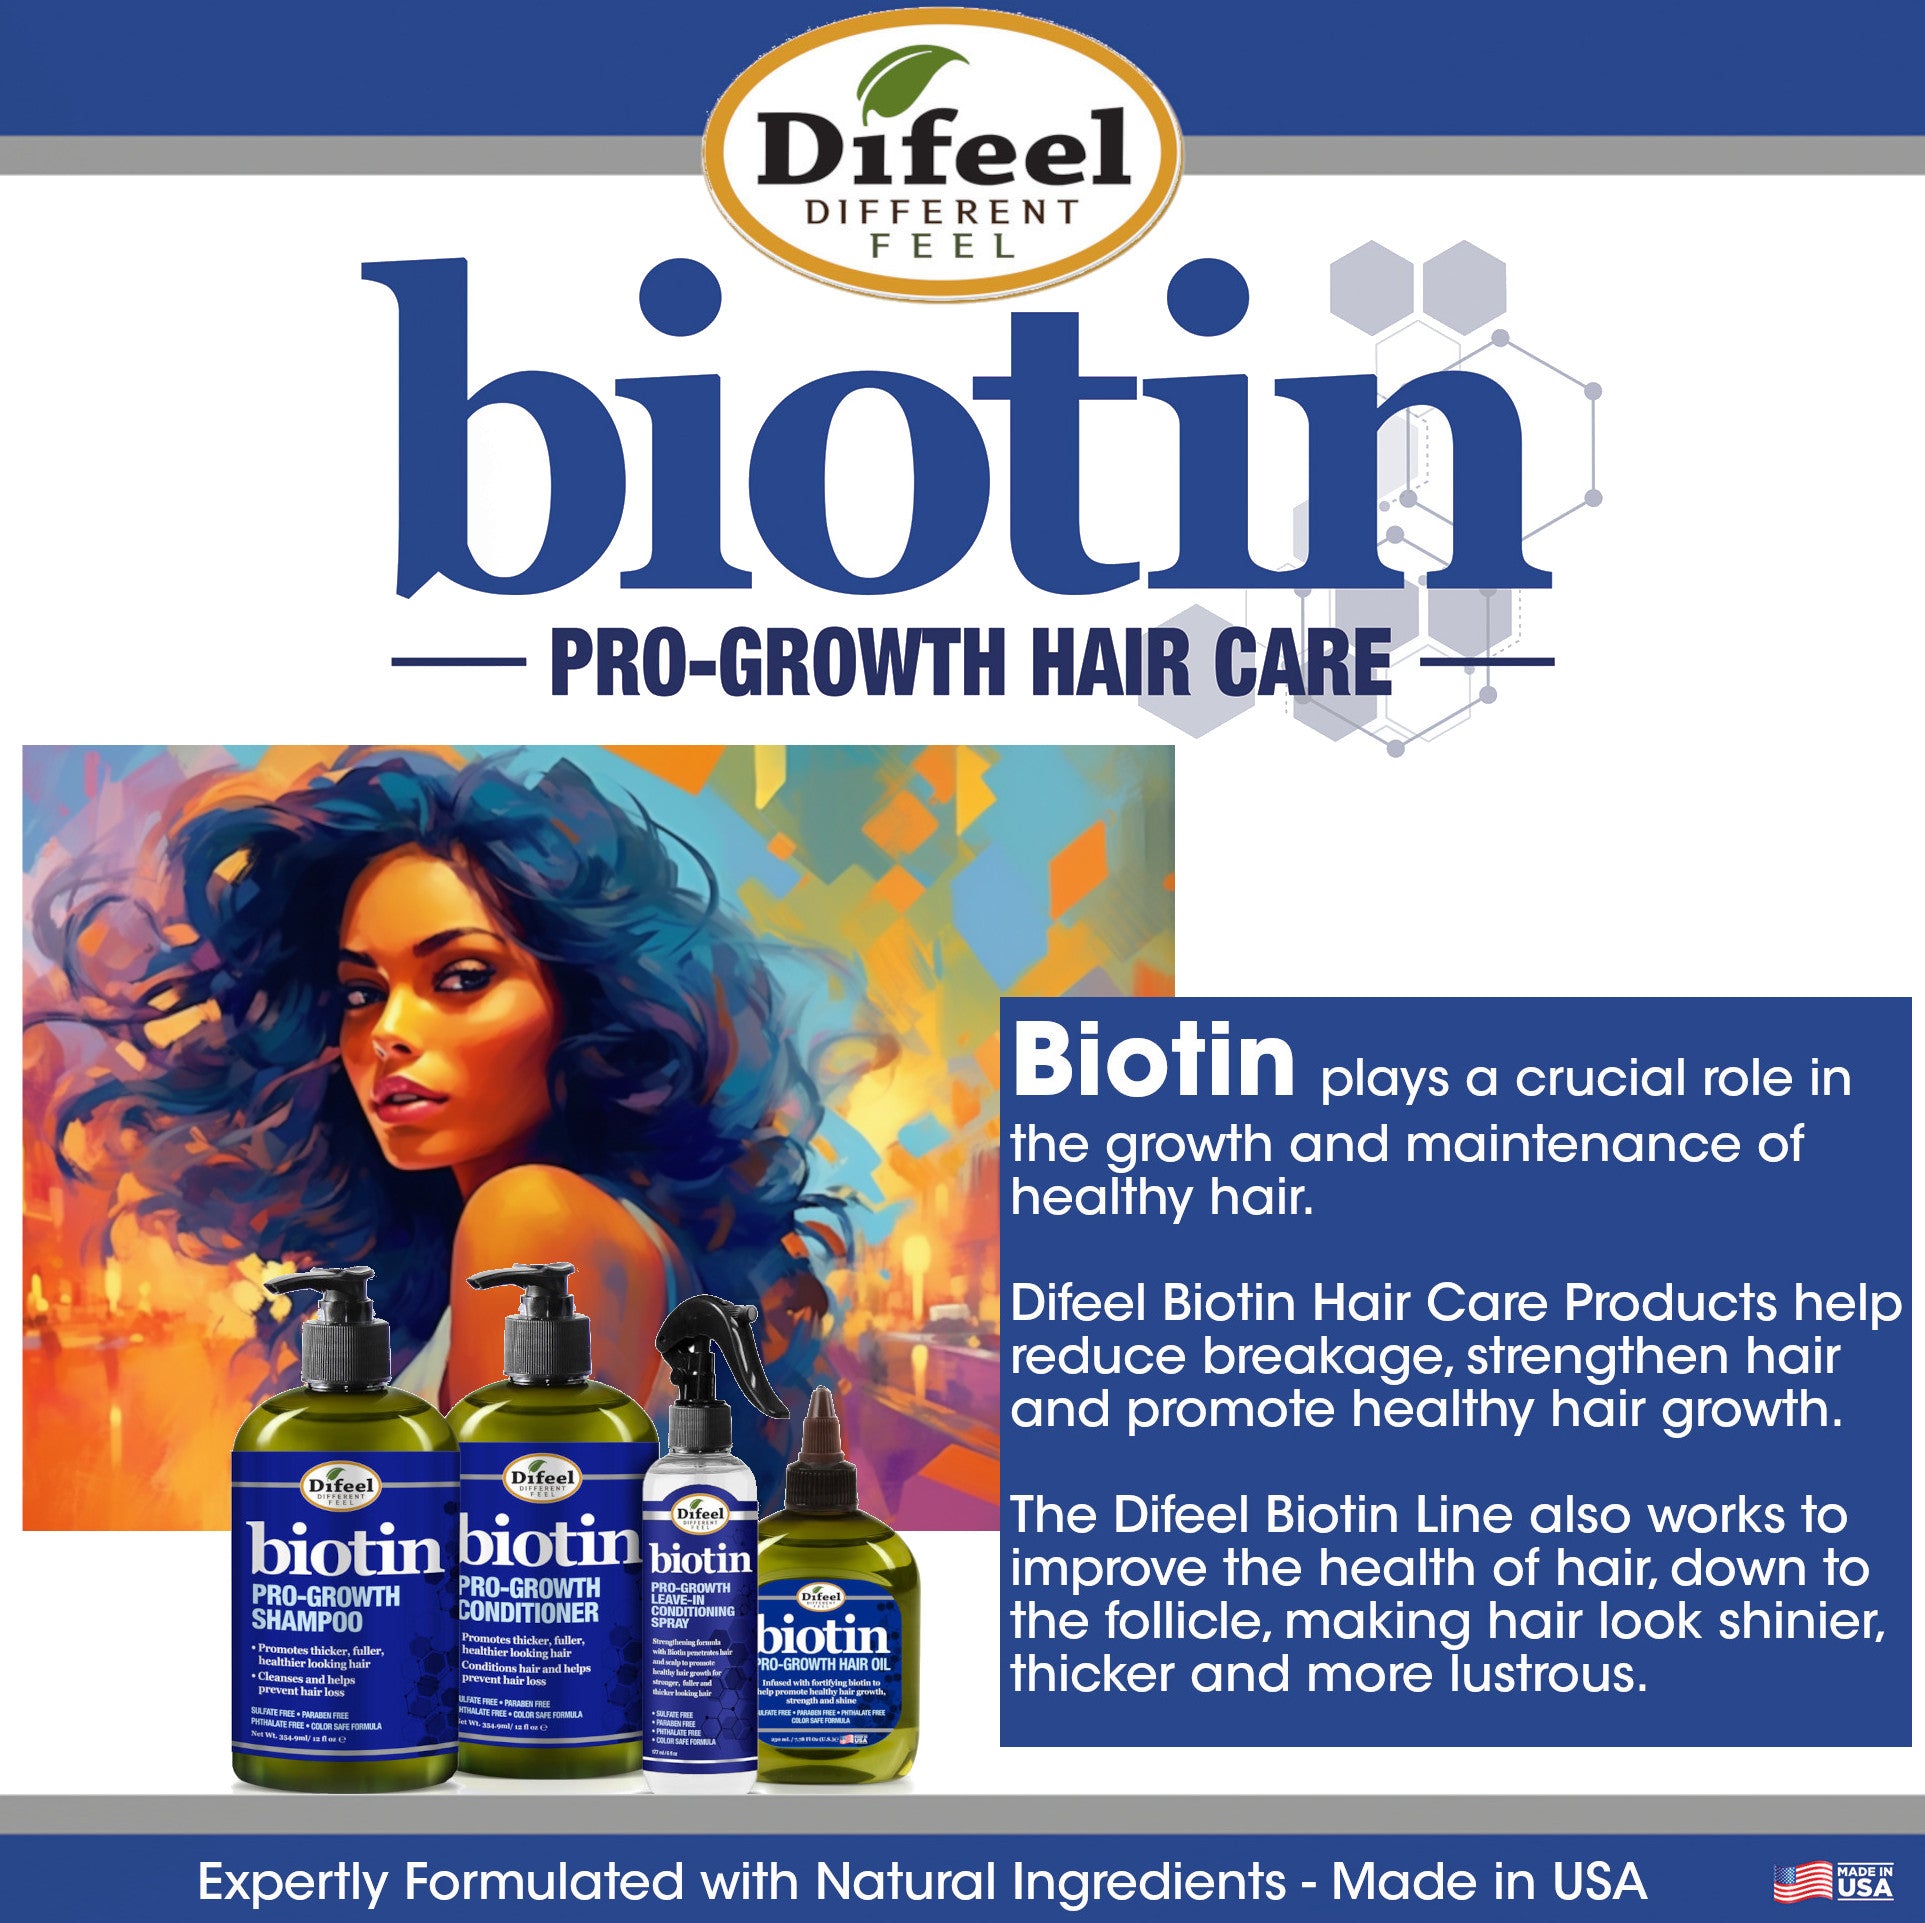 Difeel Biotin Pro-Growth Leave in Conditioning Spray 6 oz.